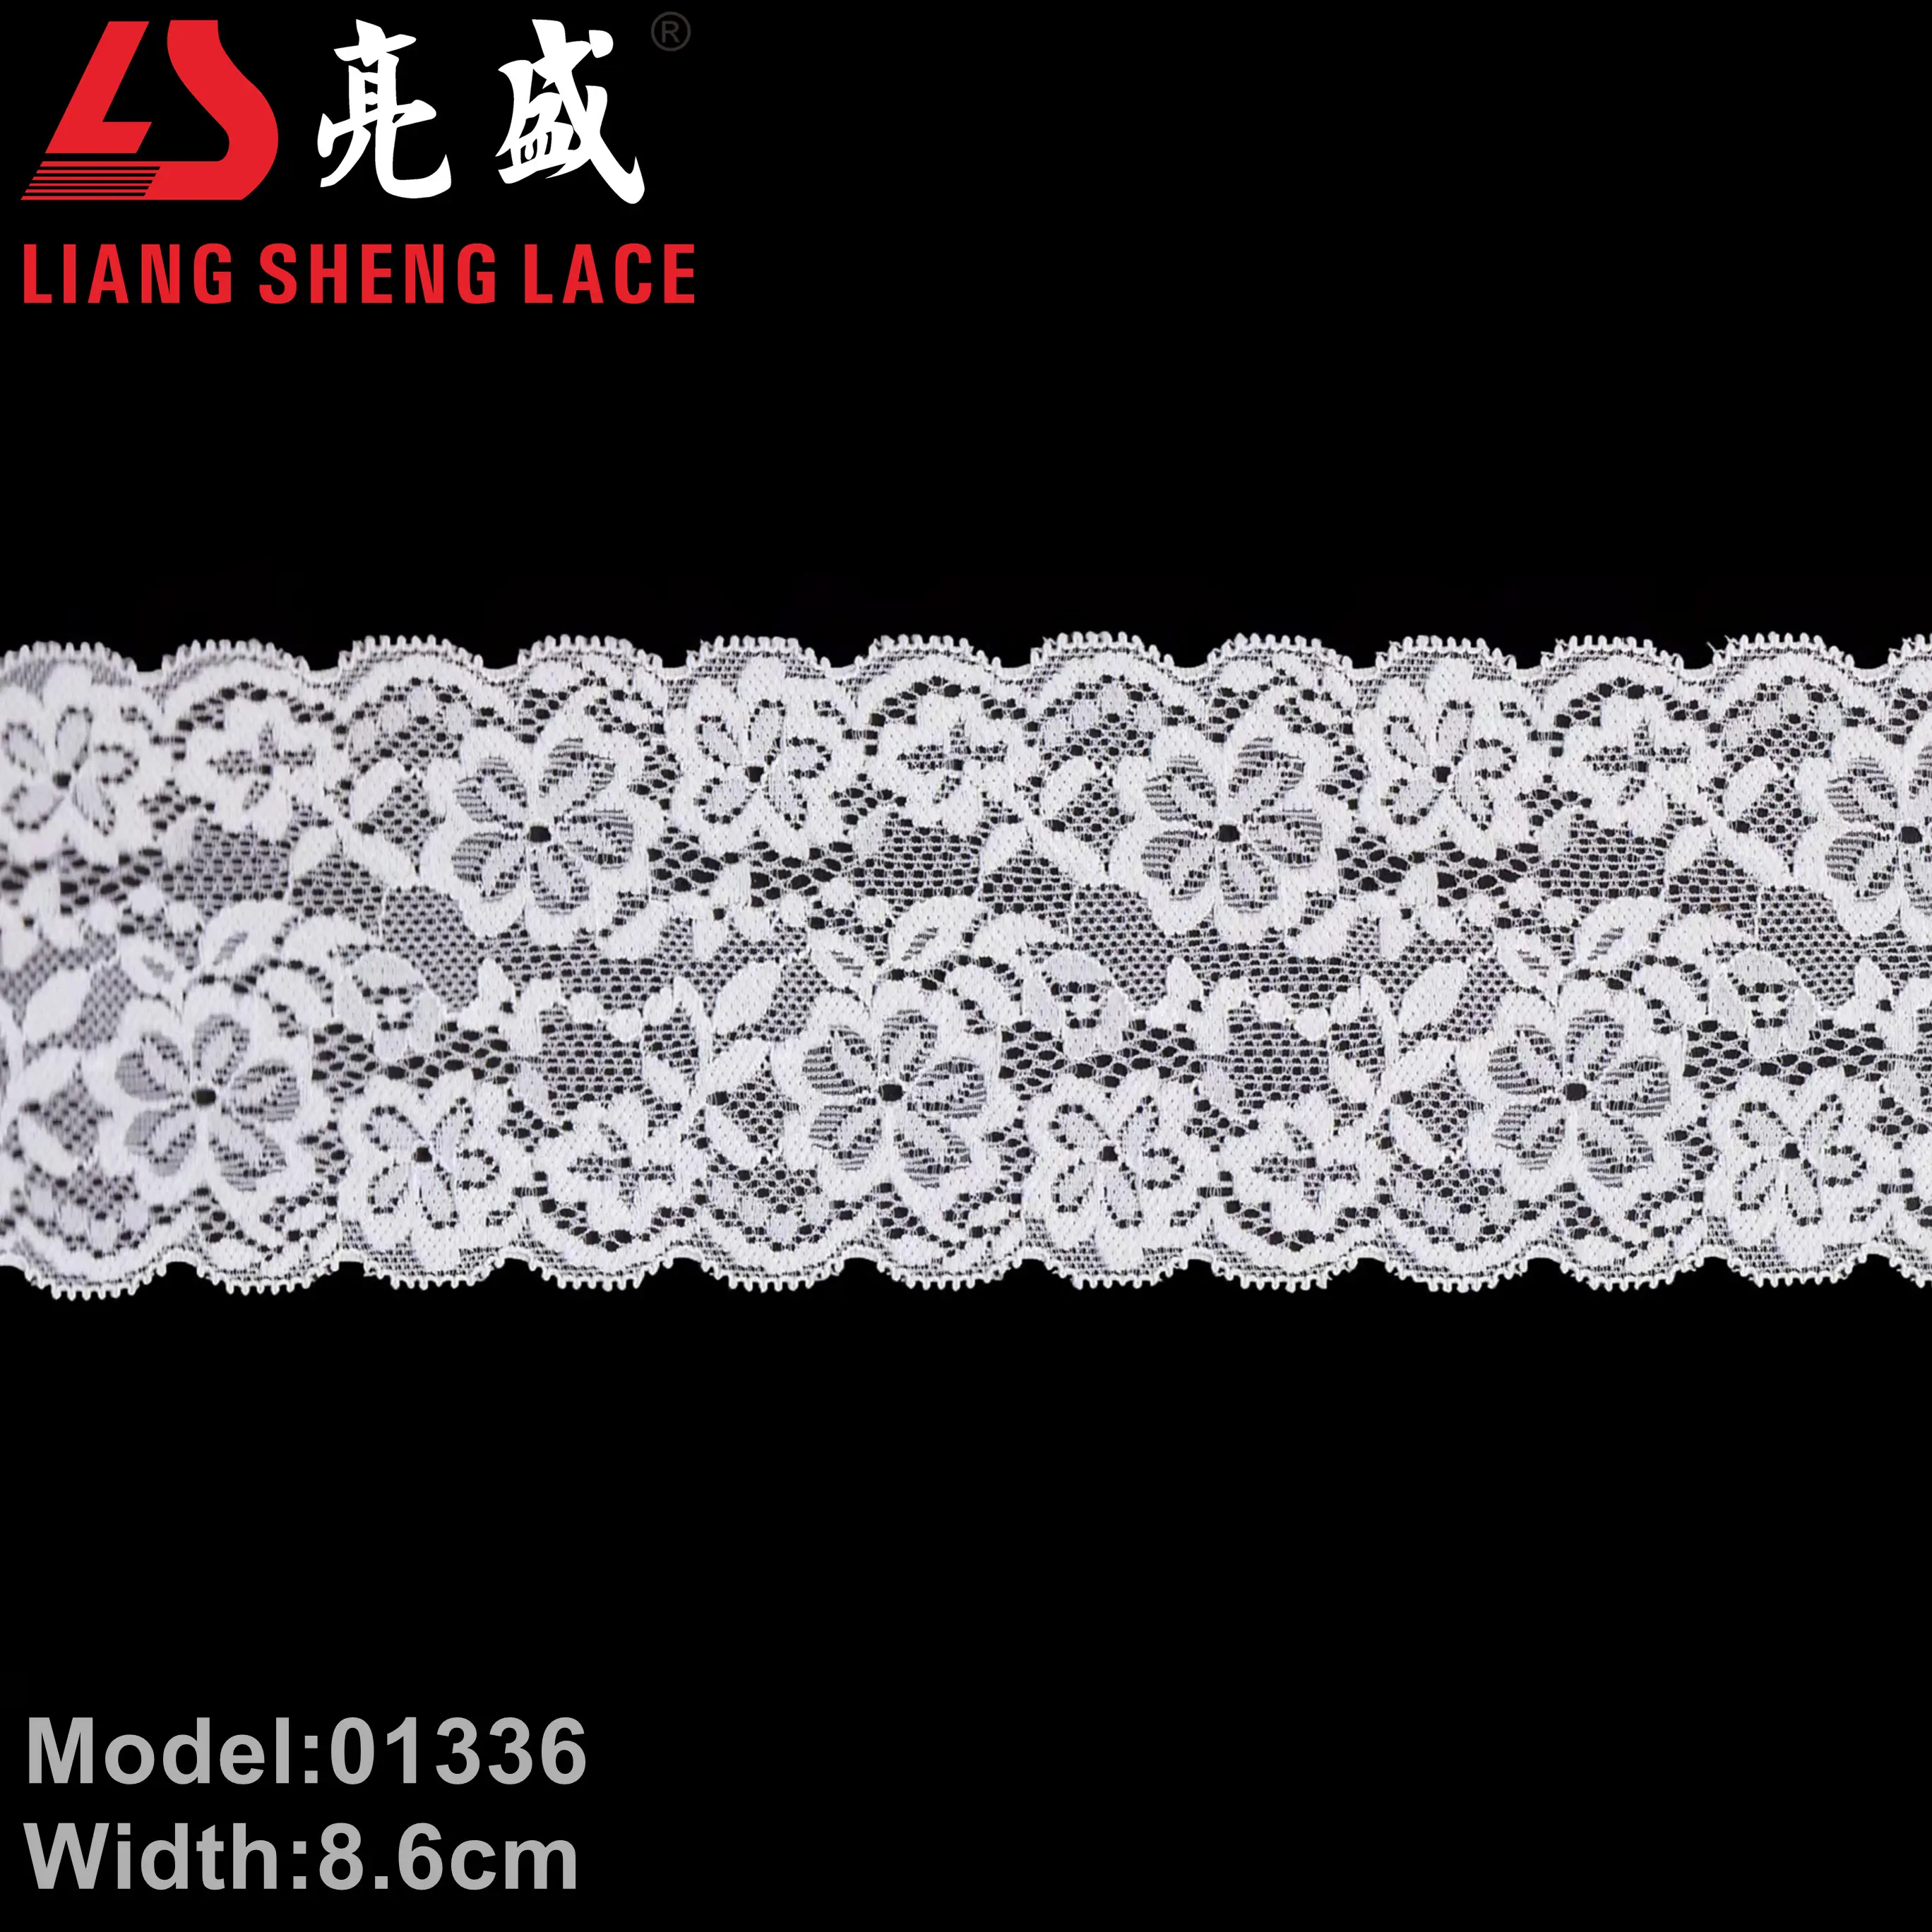 Narrow white stretch nylon lace fabric trim for lingerie decorative